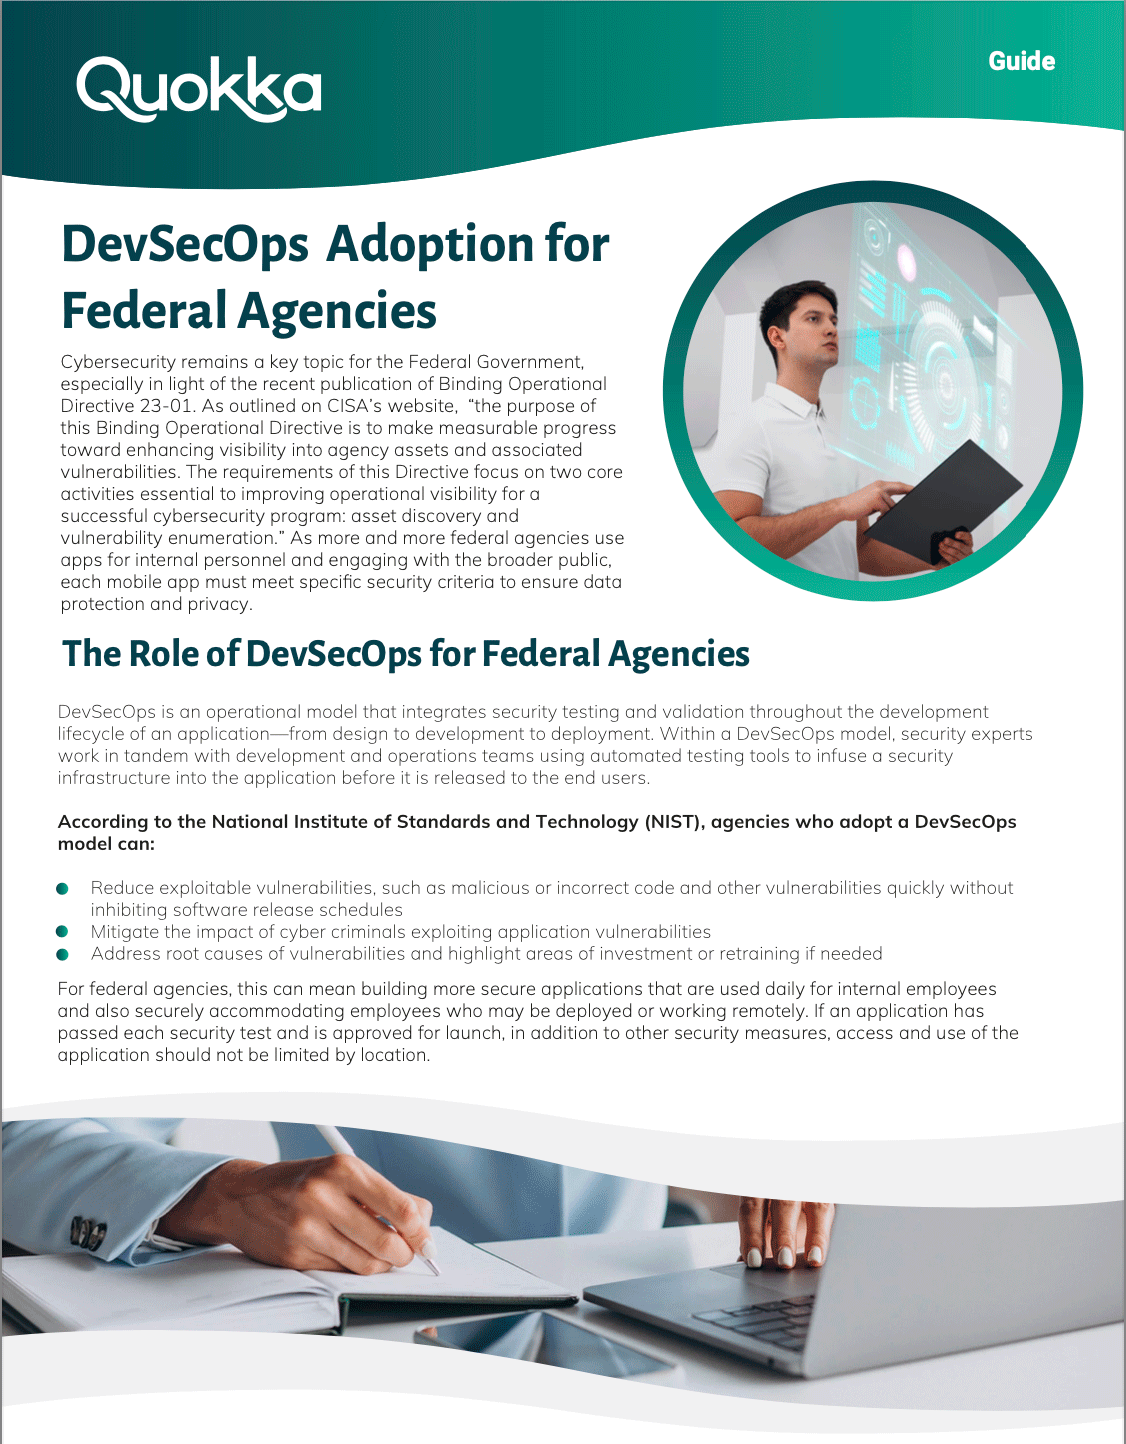 DevSecOps Adoption for Federal Agencies guide